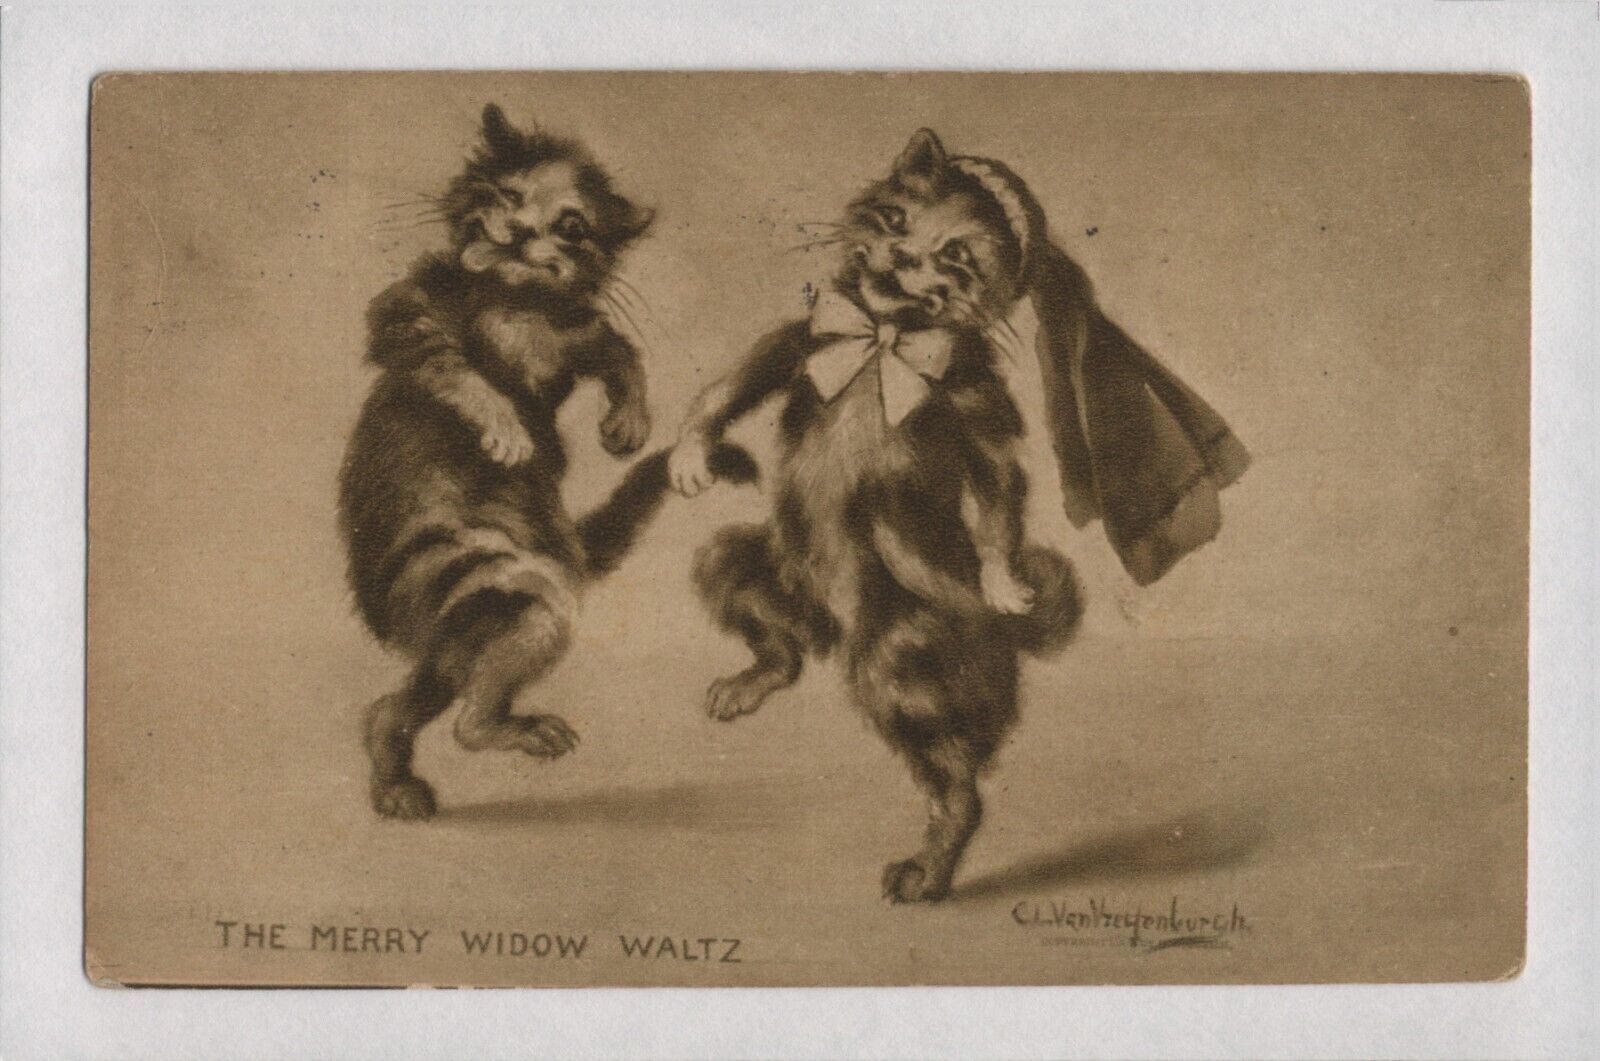 1910 Postcard 2 Cats Dancing The Merry Widow Waltz by Artist C l Van Vredenburgh